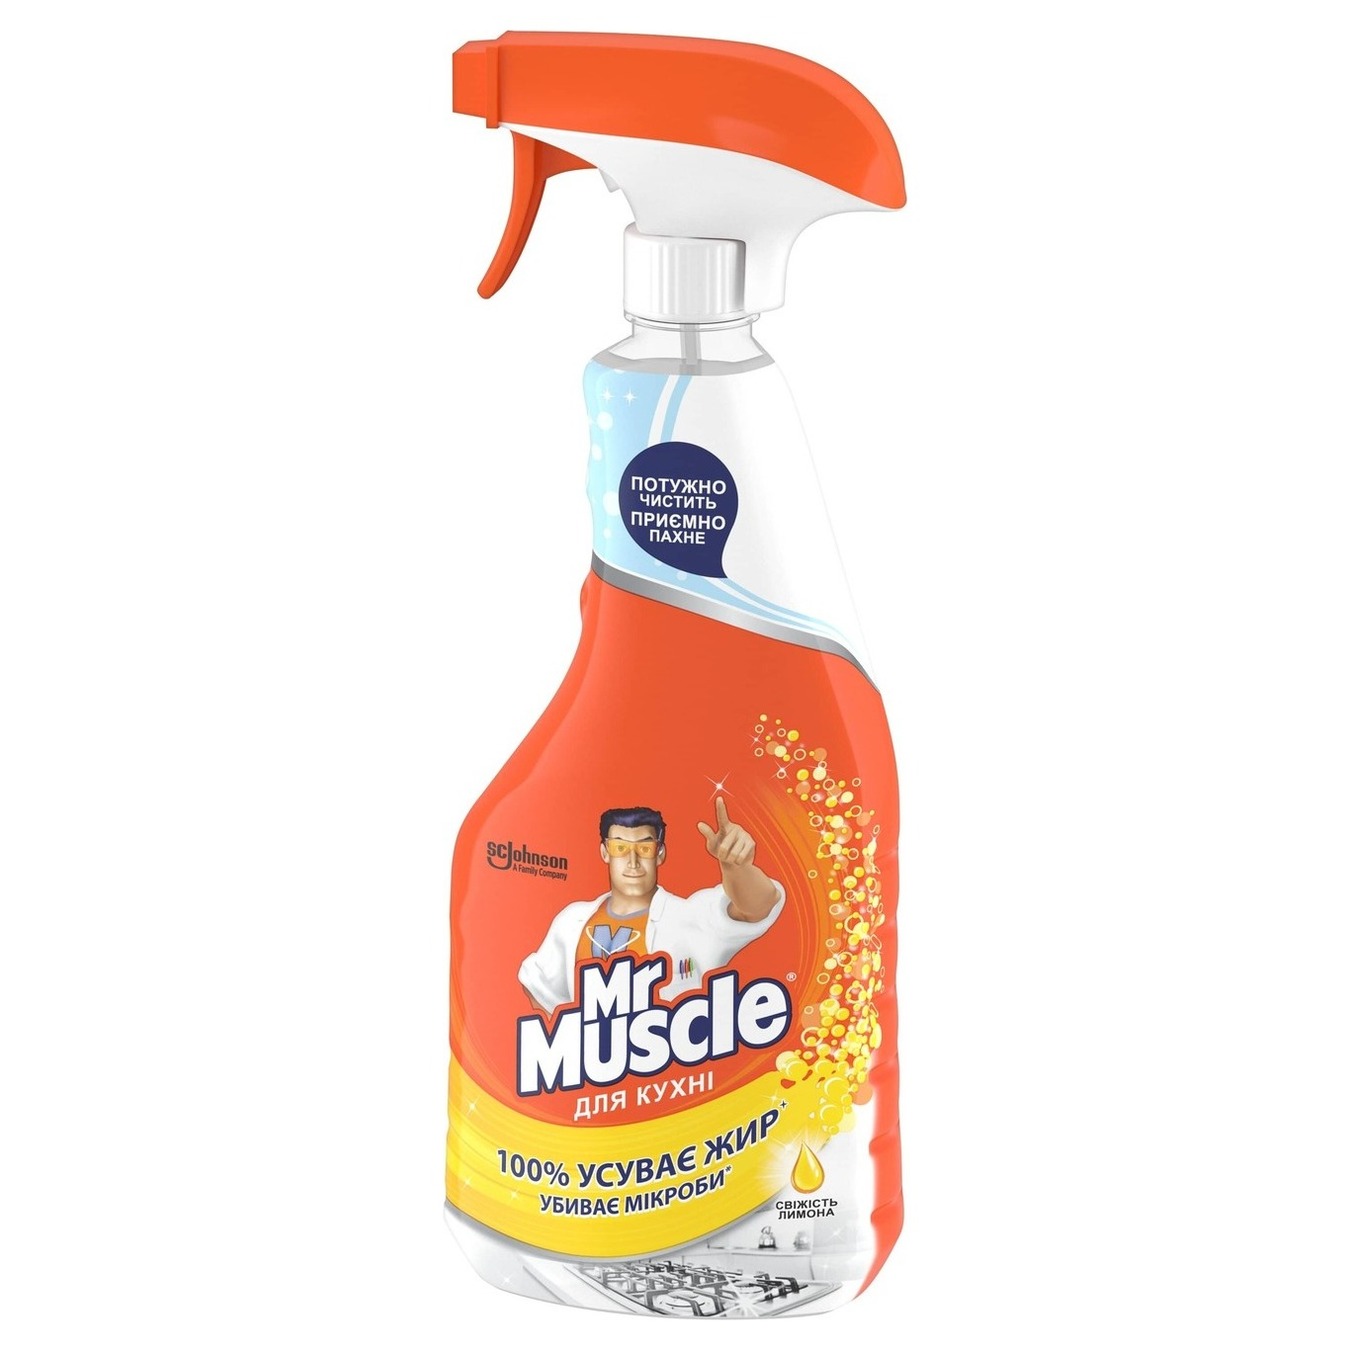 Mr. kitchen cleaner Muscle Strength of Lemon 450ml